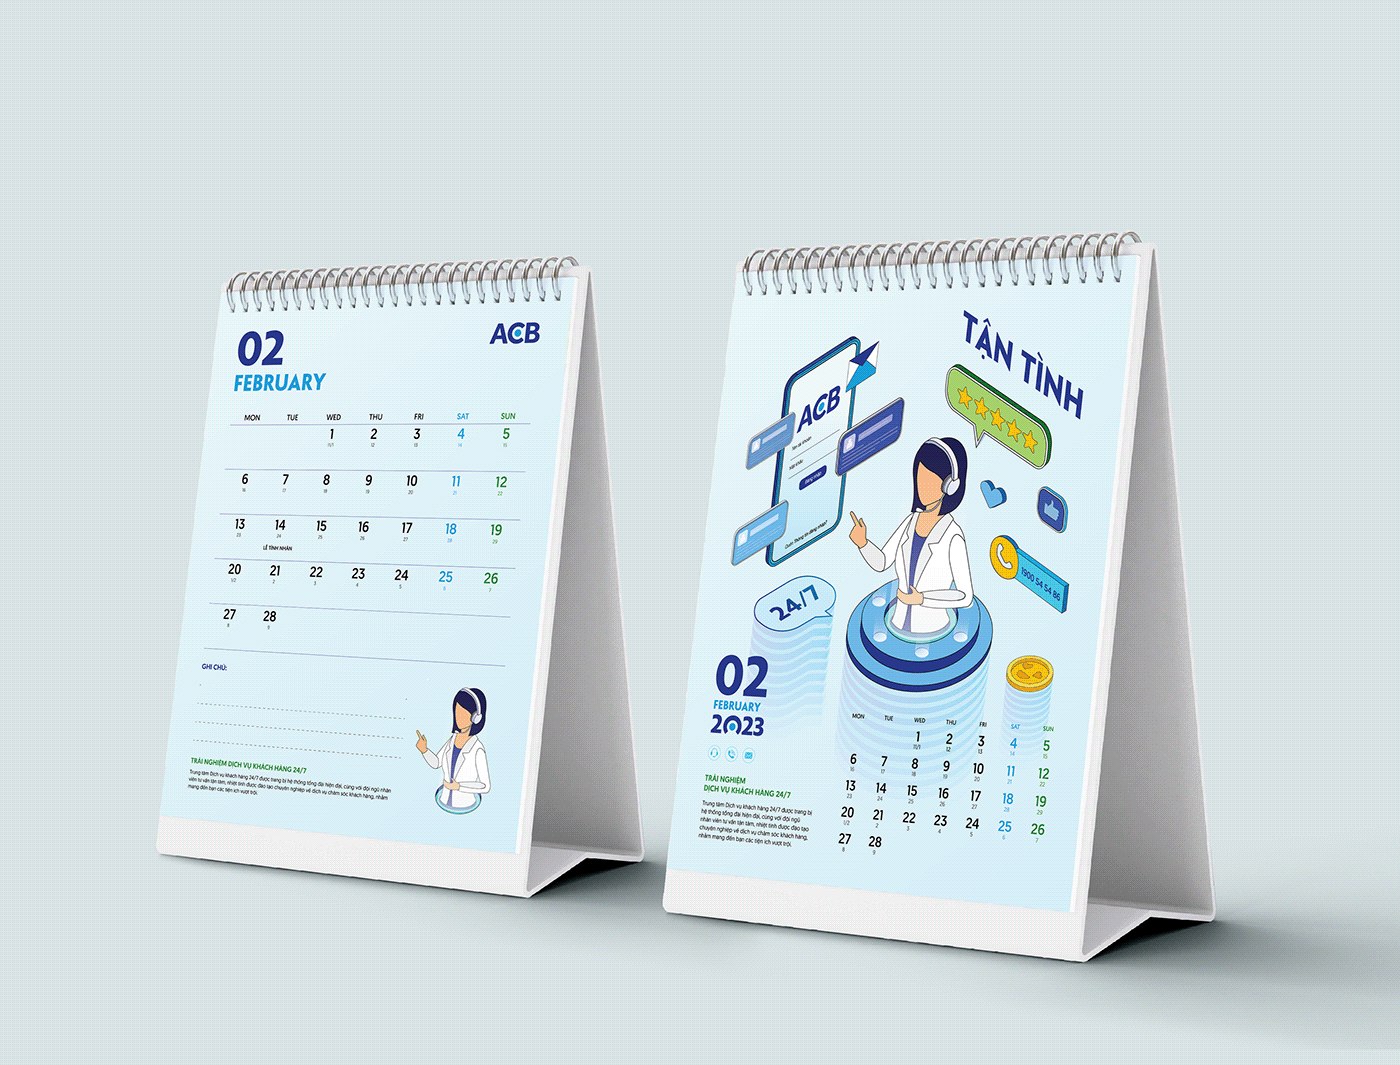 ACB bank Bank calendar calendar 2023 calendar design calendar isometric Isometric